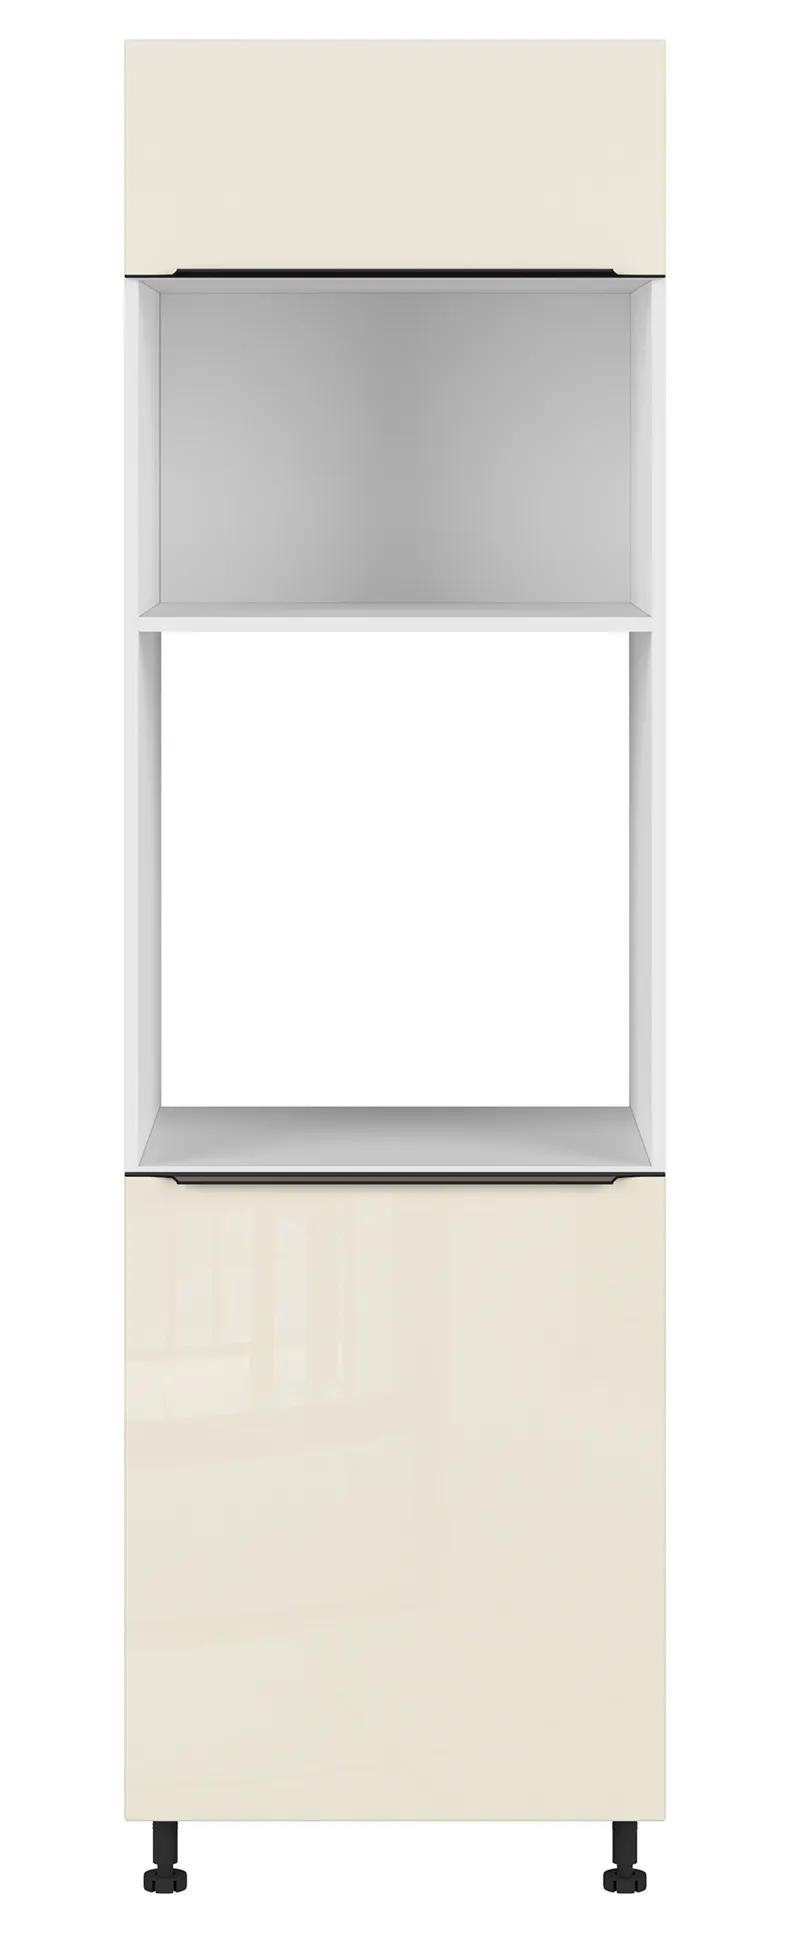 BRW Sole L6 60 см левосторонний кухонный шкаф магнолия жемчуг, альпийский белый/жемчуг магнолии FM_DPS_60/207_L/O-BAL/MAPE фото №1